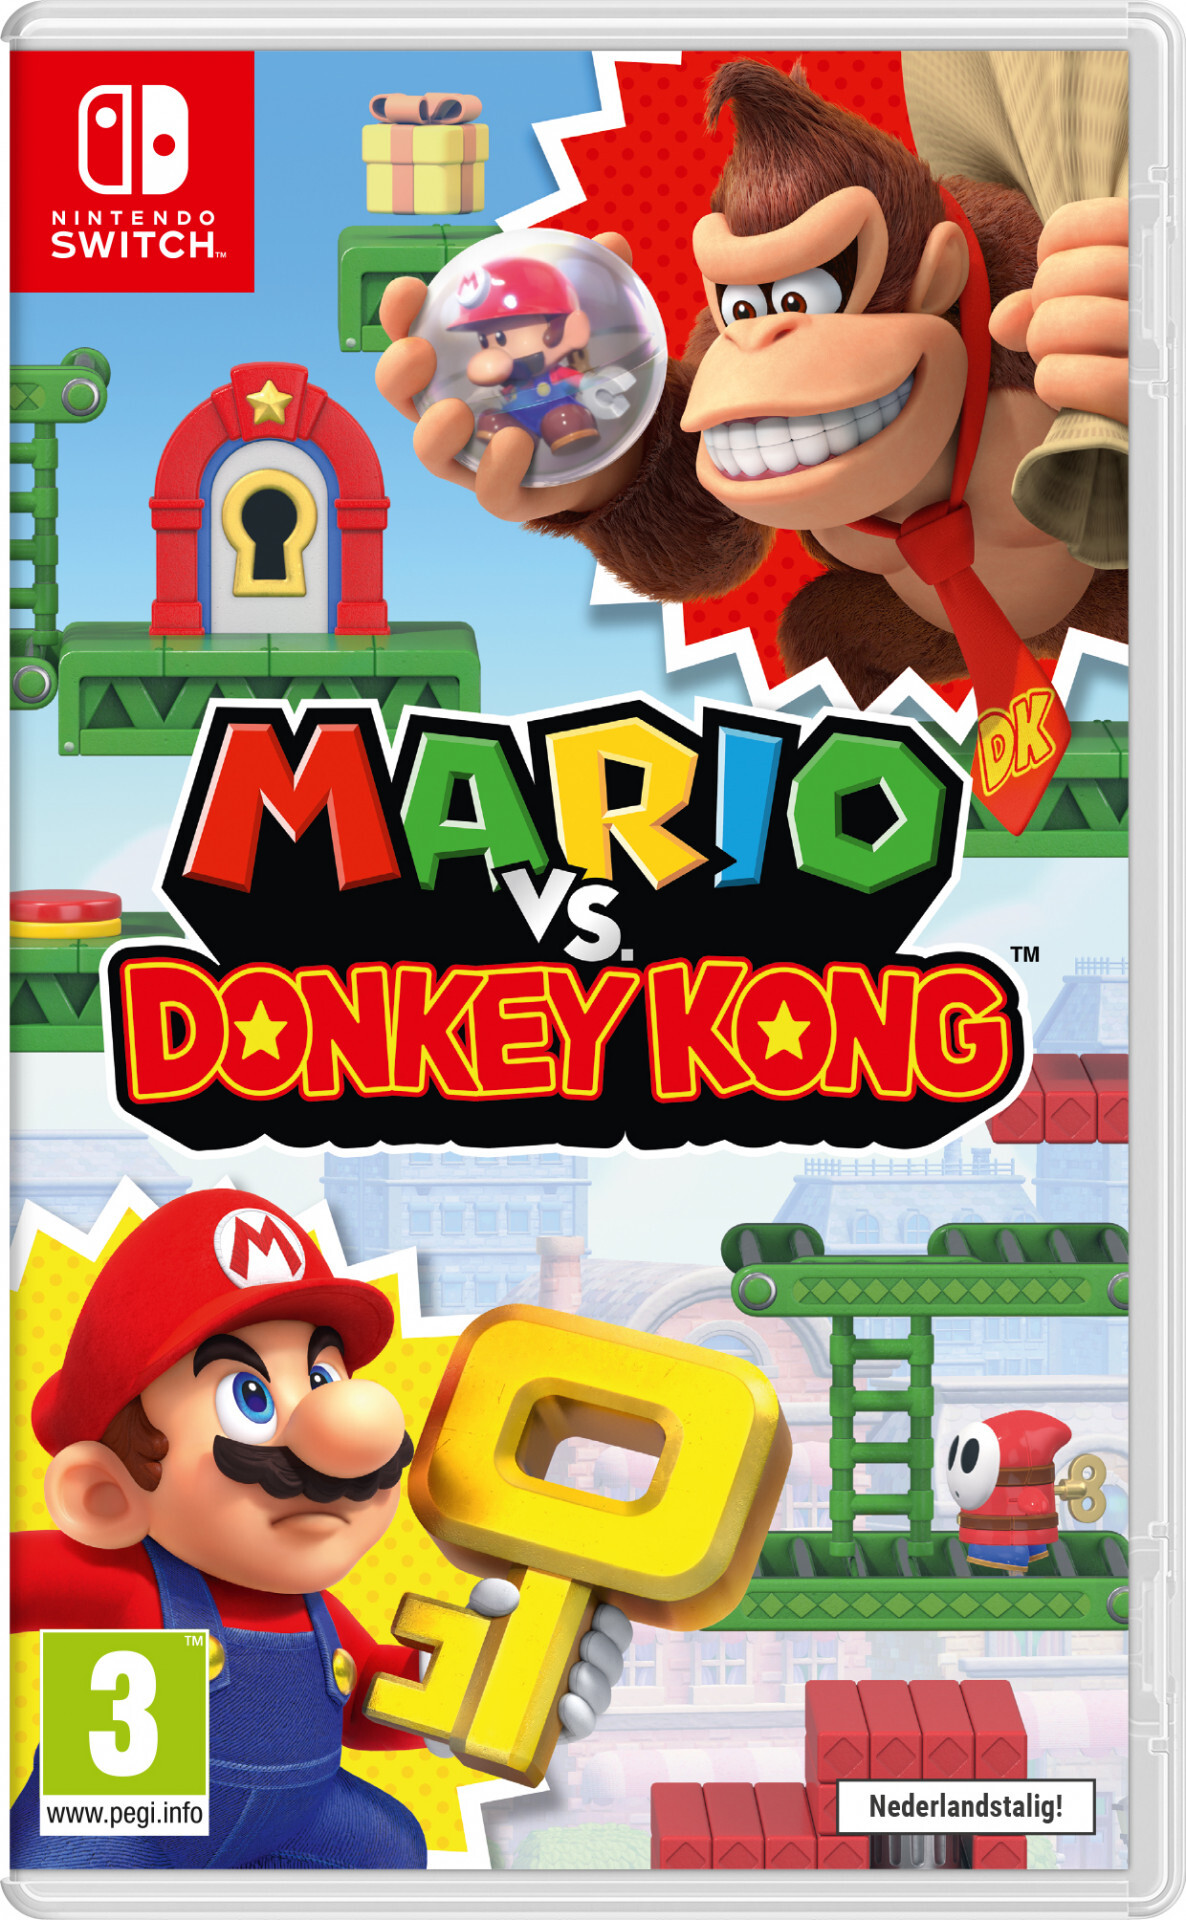 Nintendo Mario vs Donkey Kong